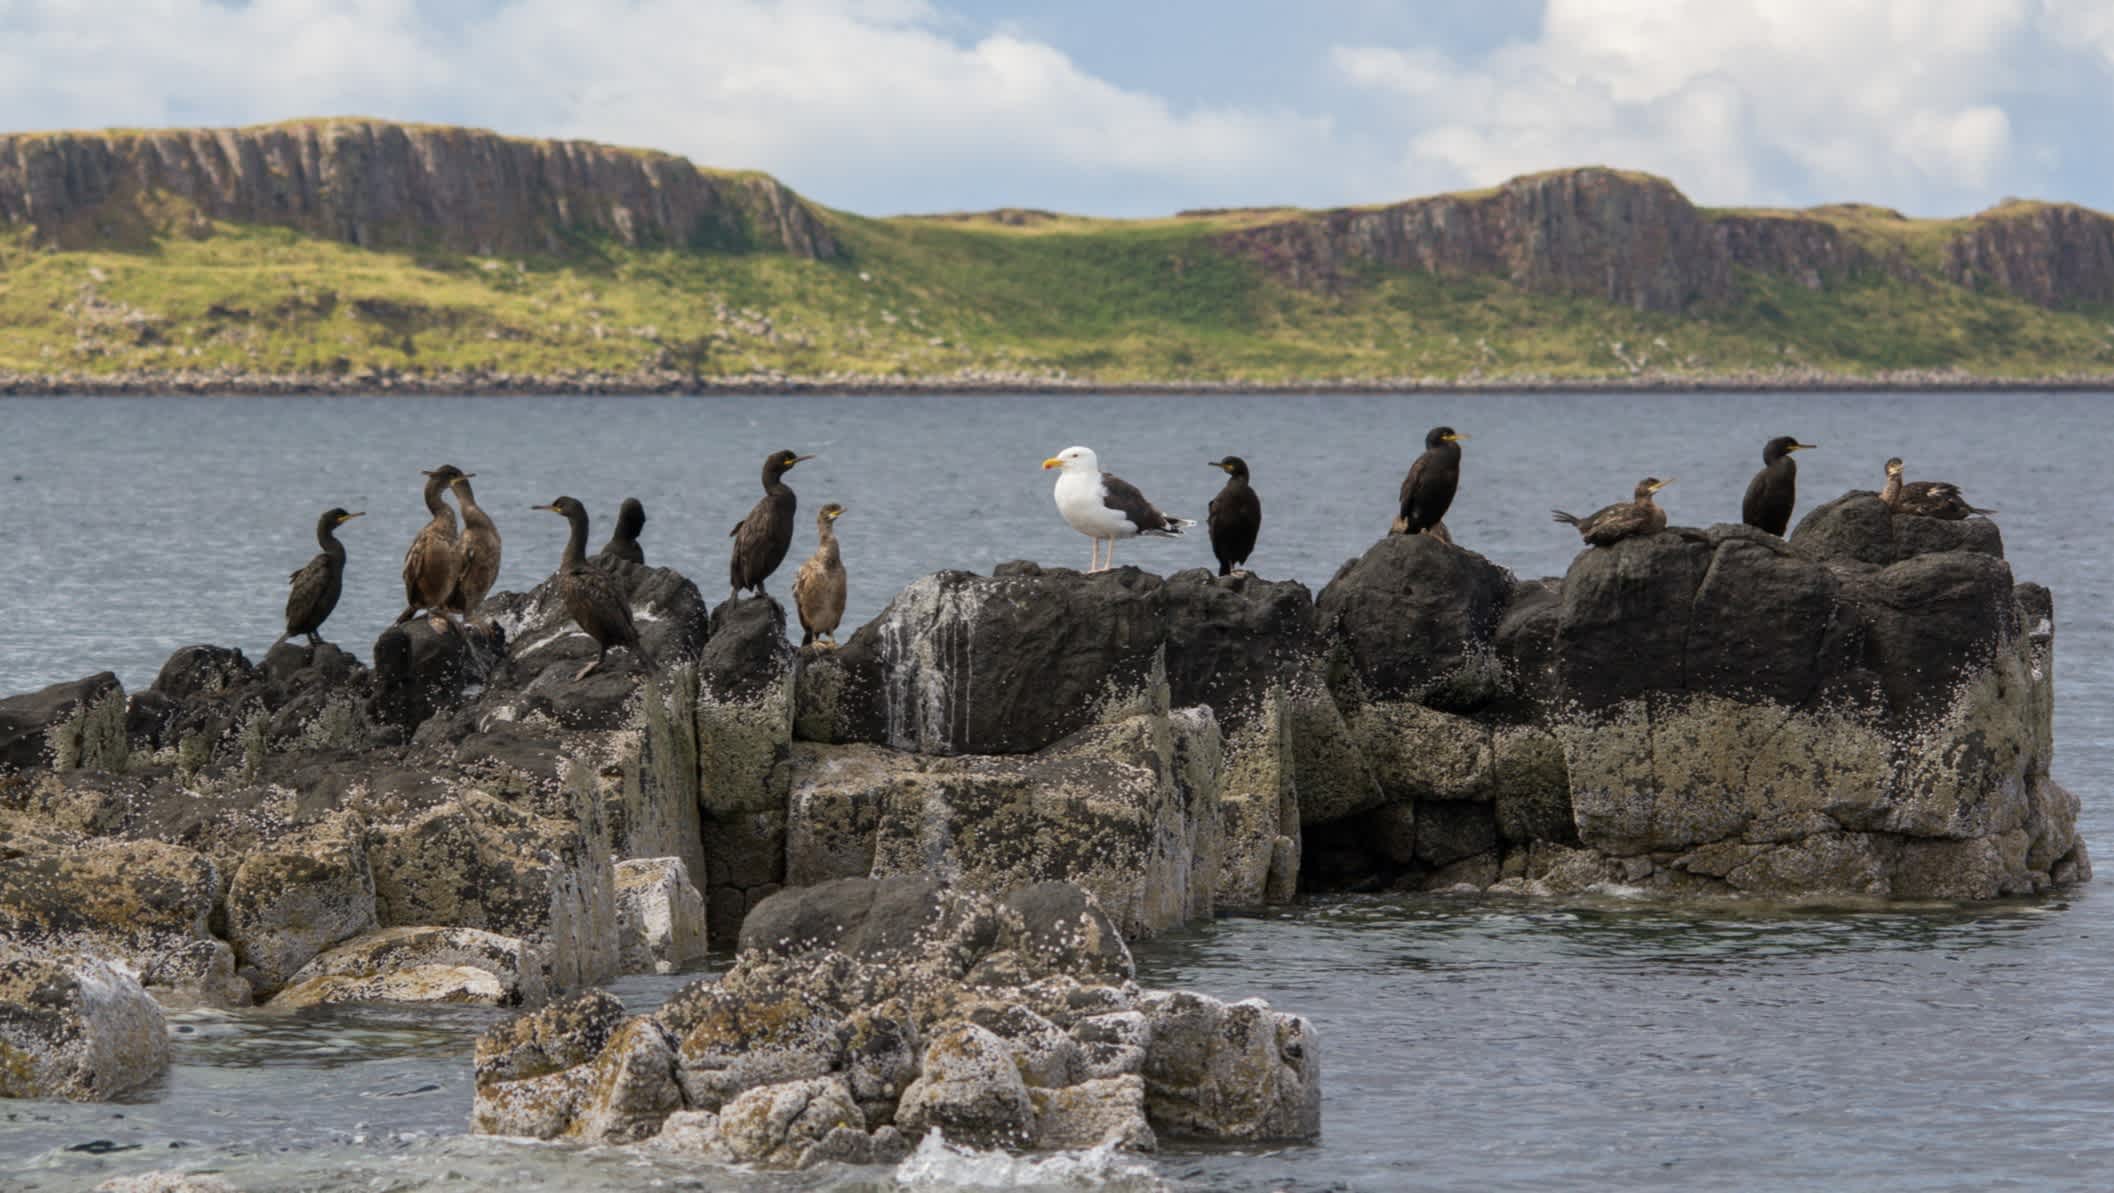 Seevögel auf Felsen, Isle Of Skye, Schottland

